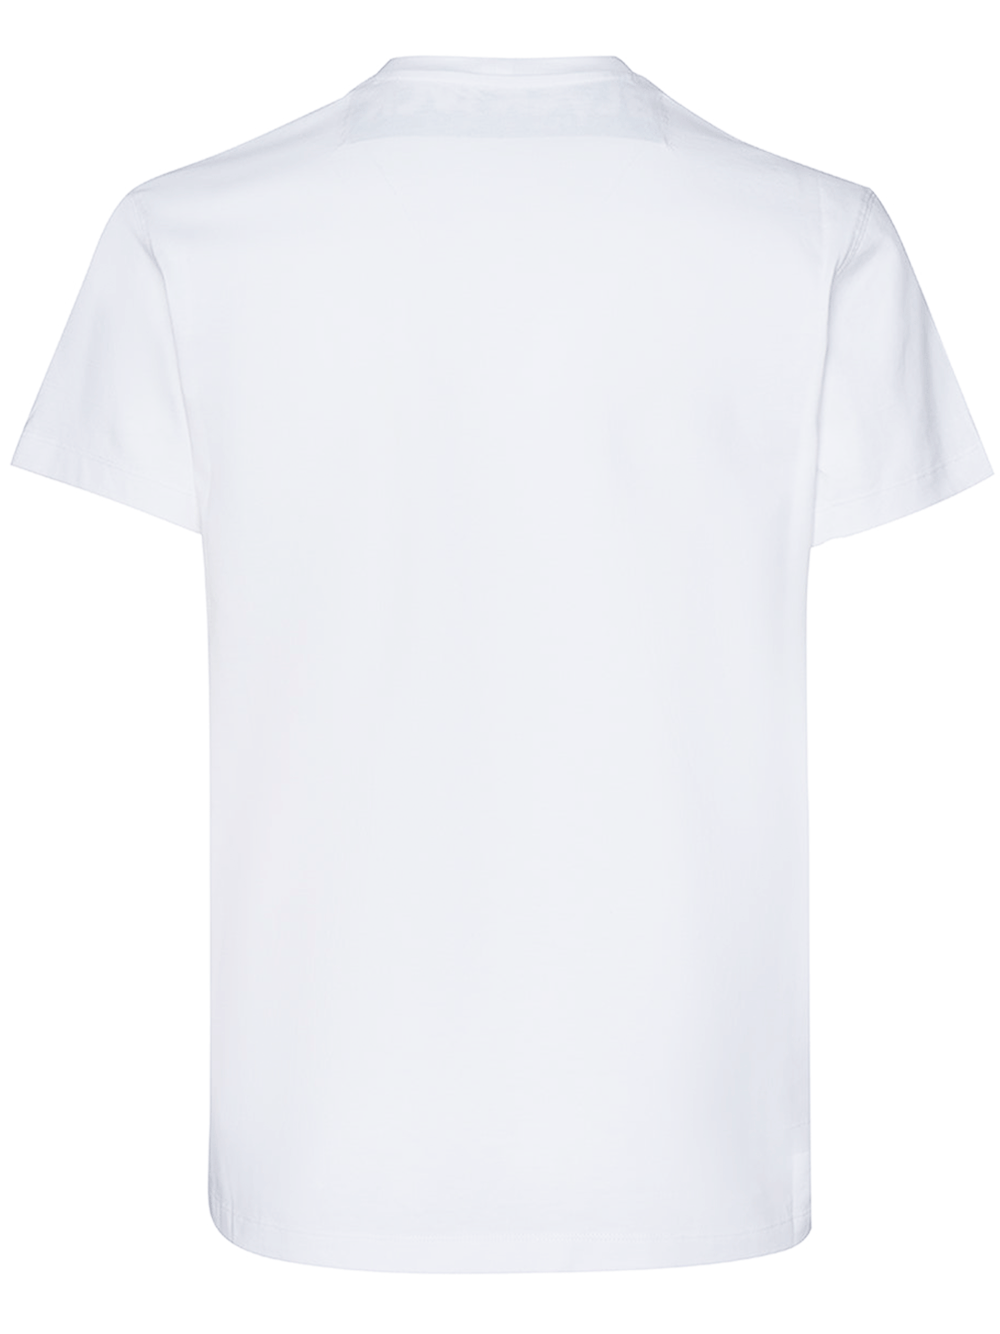 BLACKJACK-New-Human-Unisex-T-Shirt-White_2